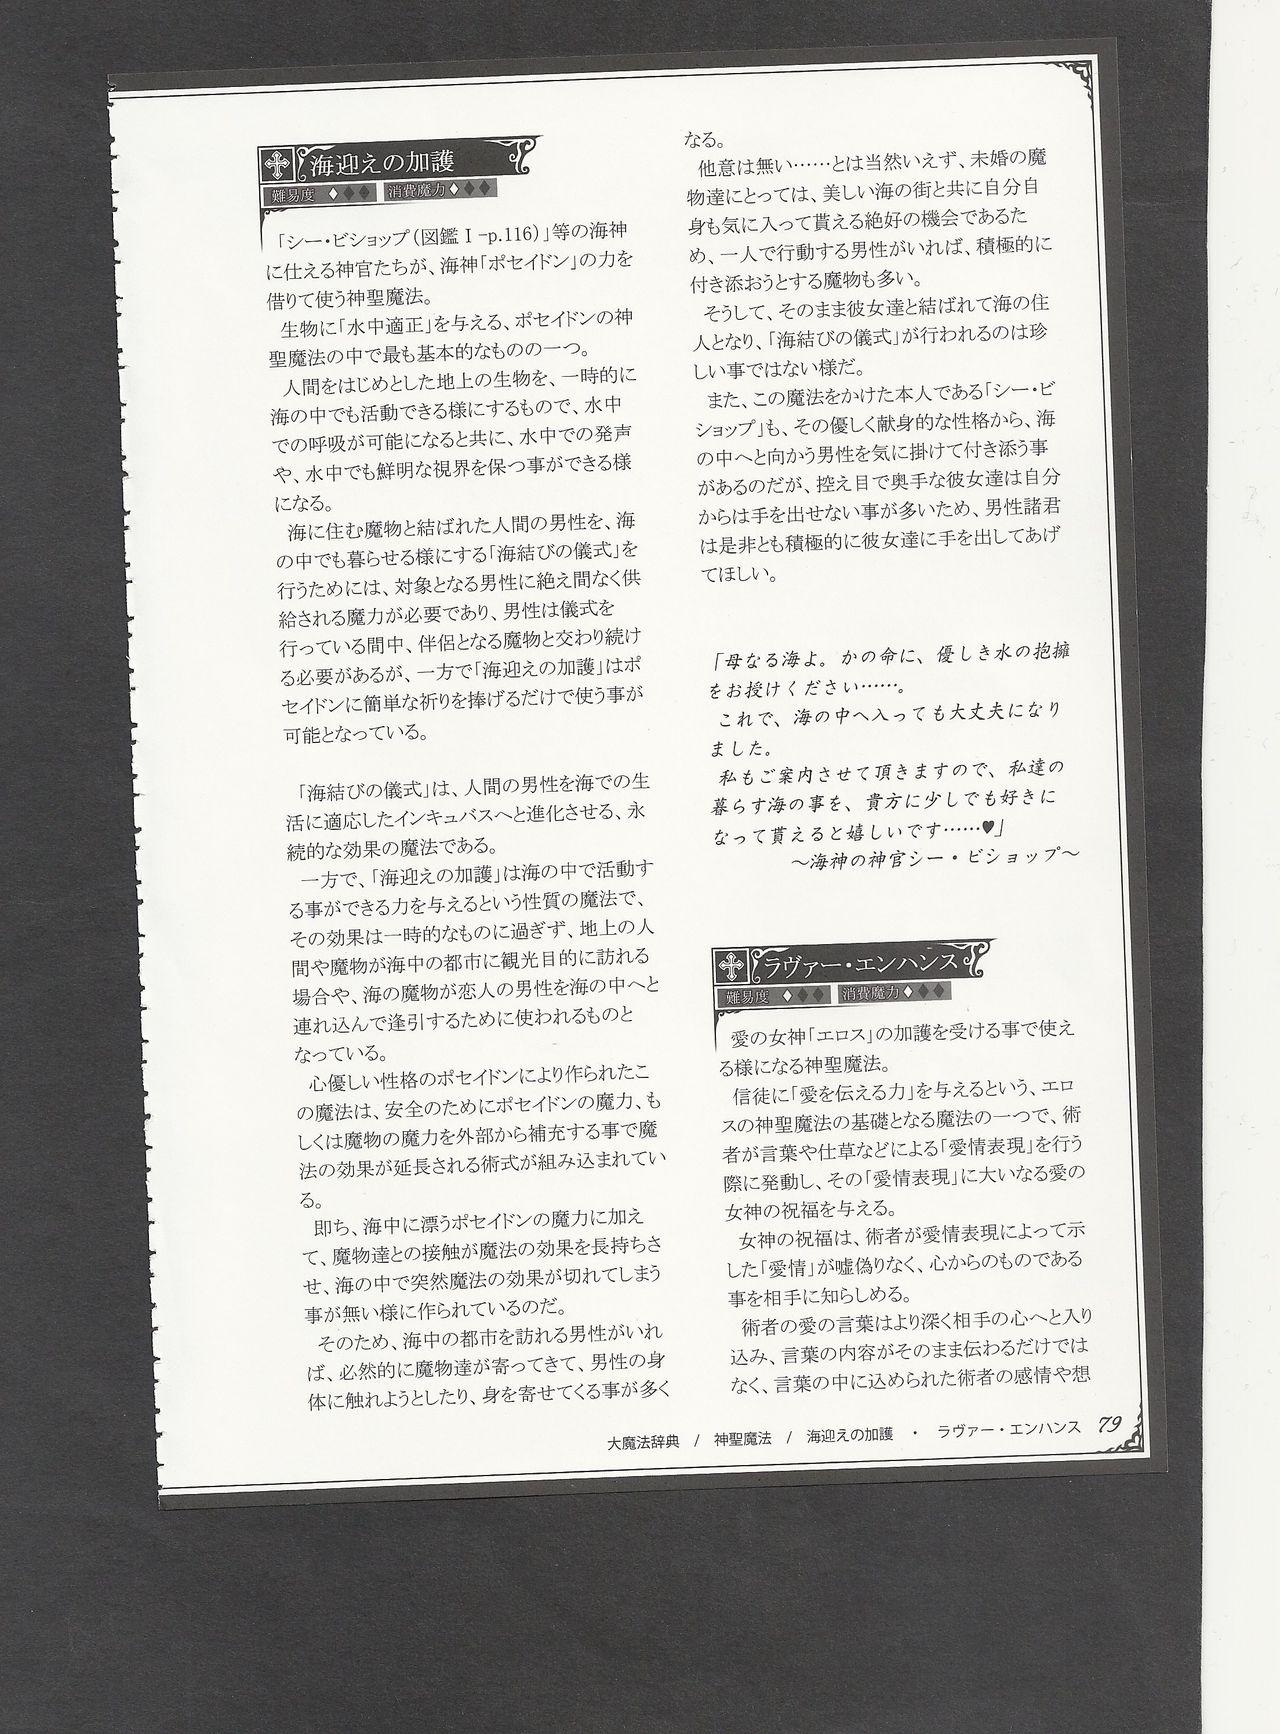 Mamono Musume Zukan World Guide III 81